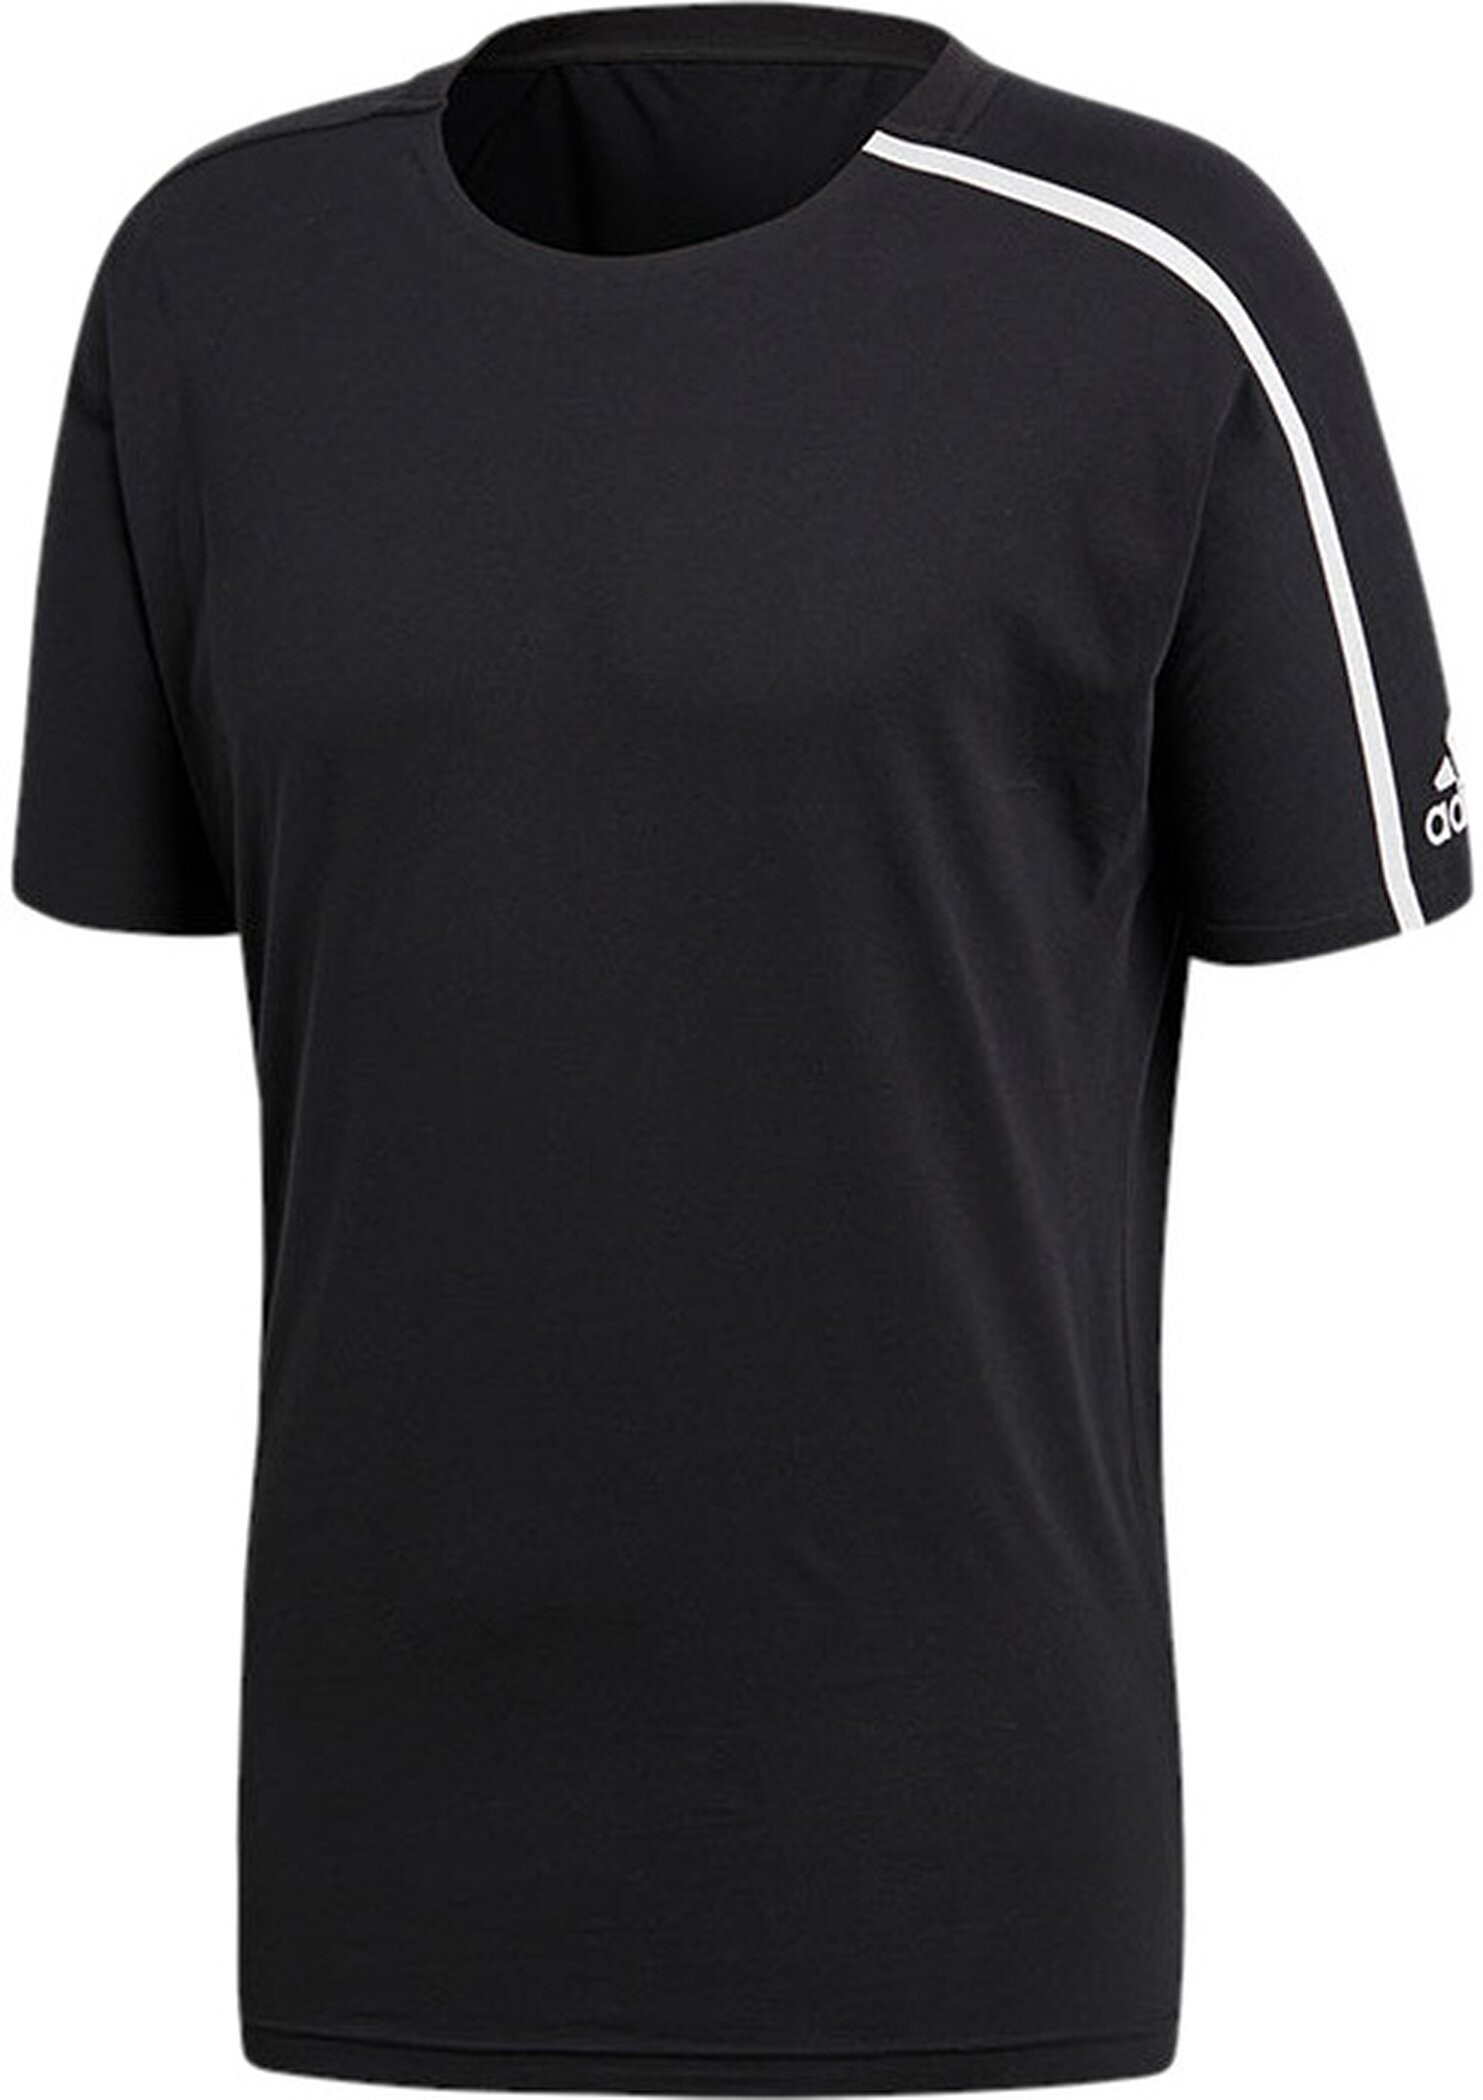 ADIDAS Lifestyle - Textilien - T-Shirts Z.N.E. Tee T-Shirt